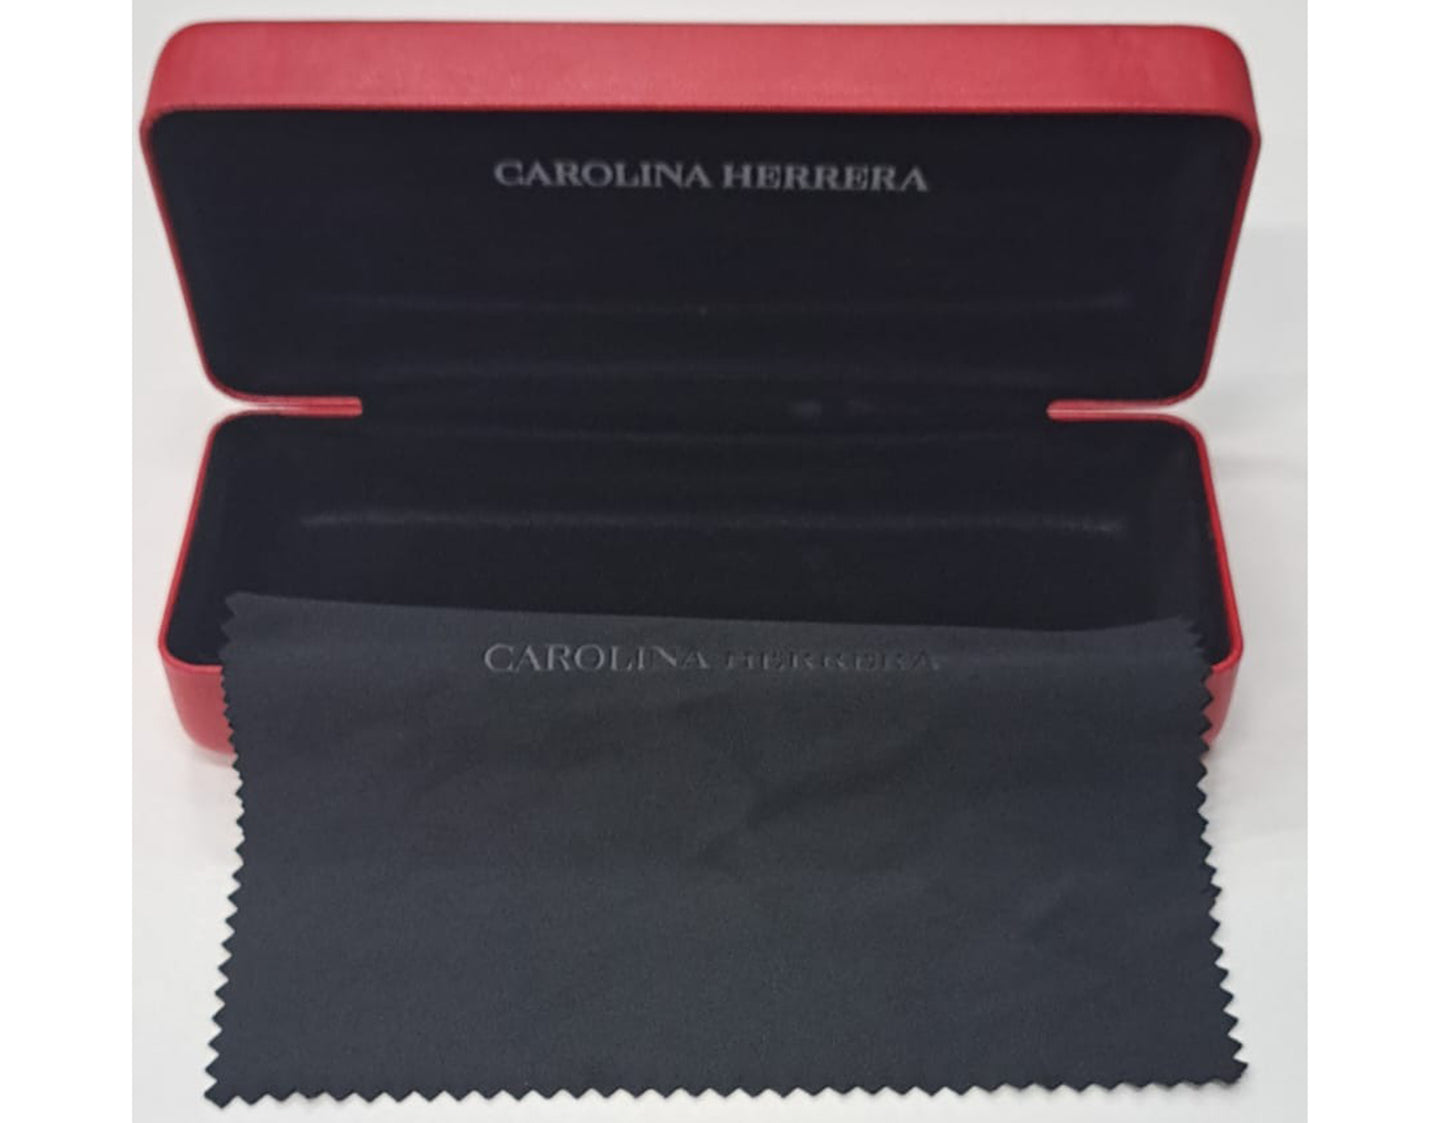 Carolina Herrera VHE878-0700-53 53mm New Eyeglasses